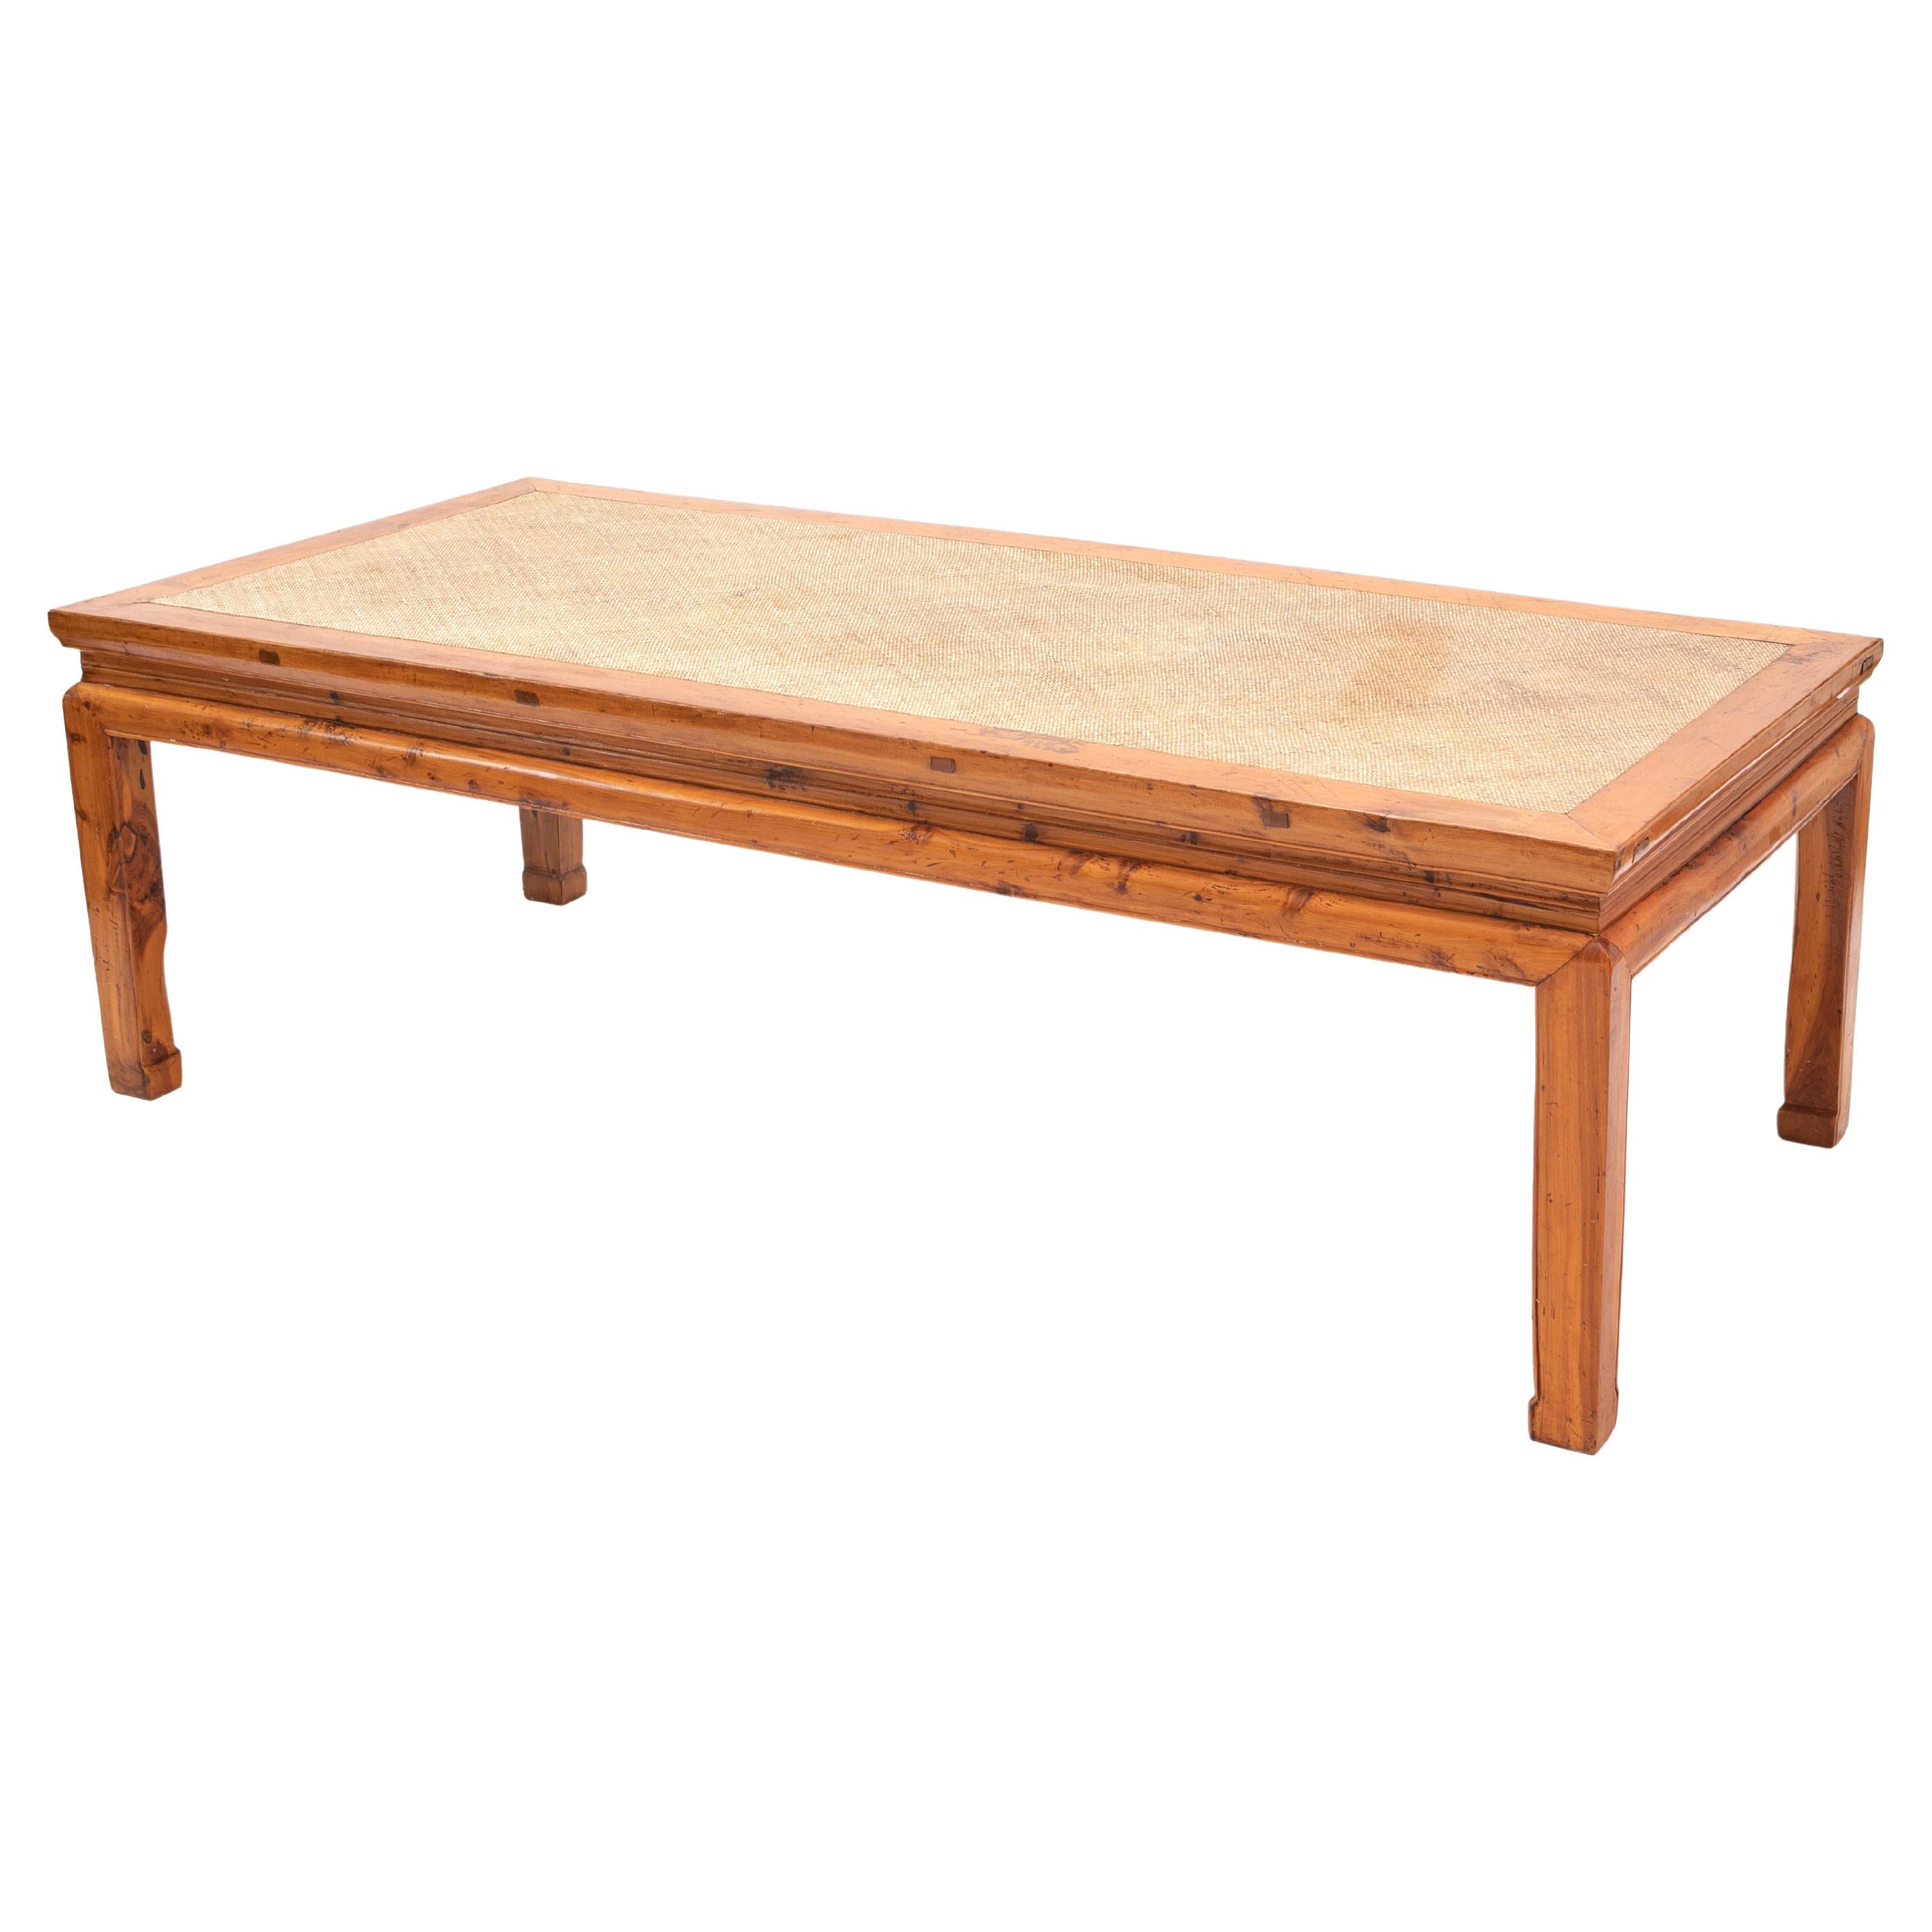 Peach wood & Hard Cane Coffee Table For Sale